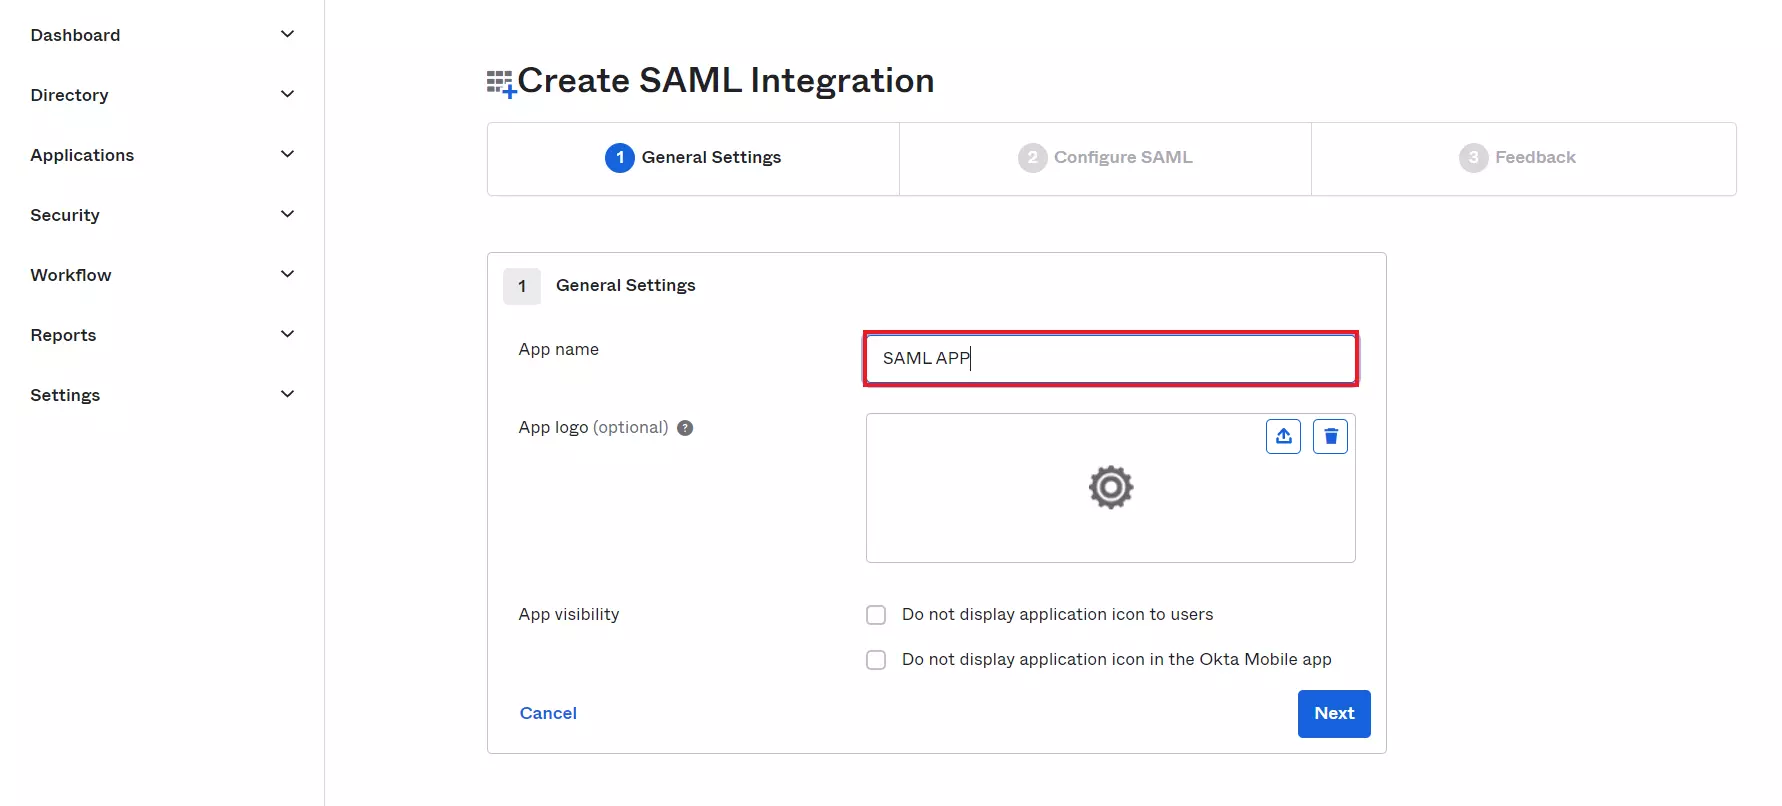 nopCommerce SAML Single Sign-On (SSO) - SAML 2.0 Configure